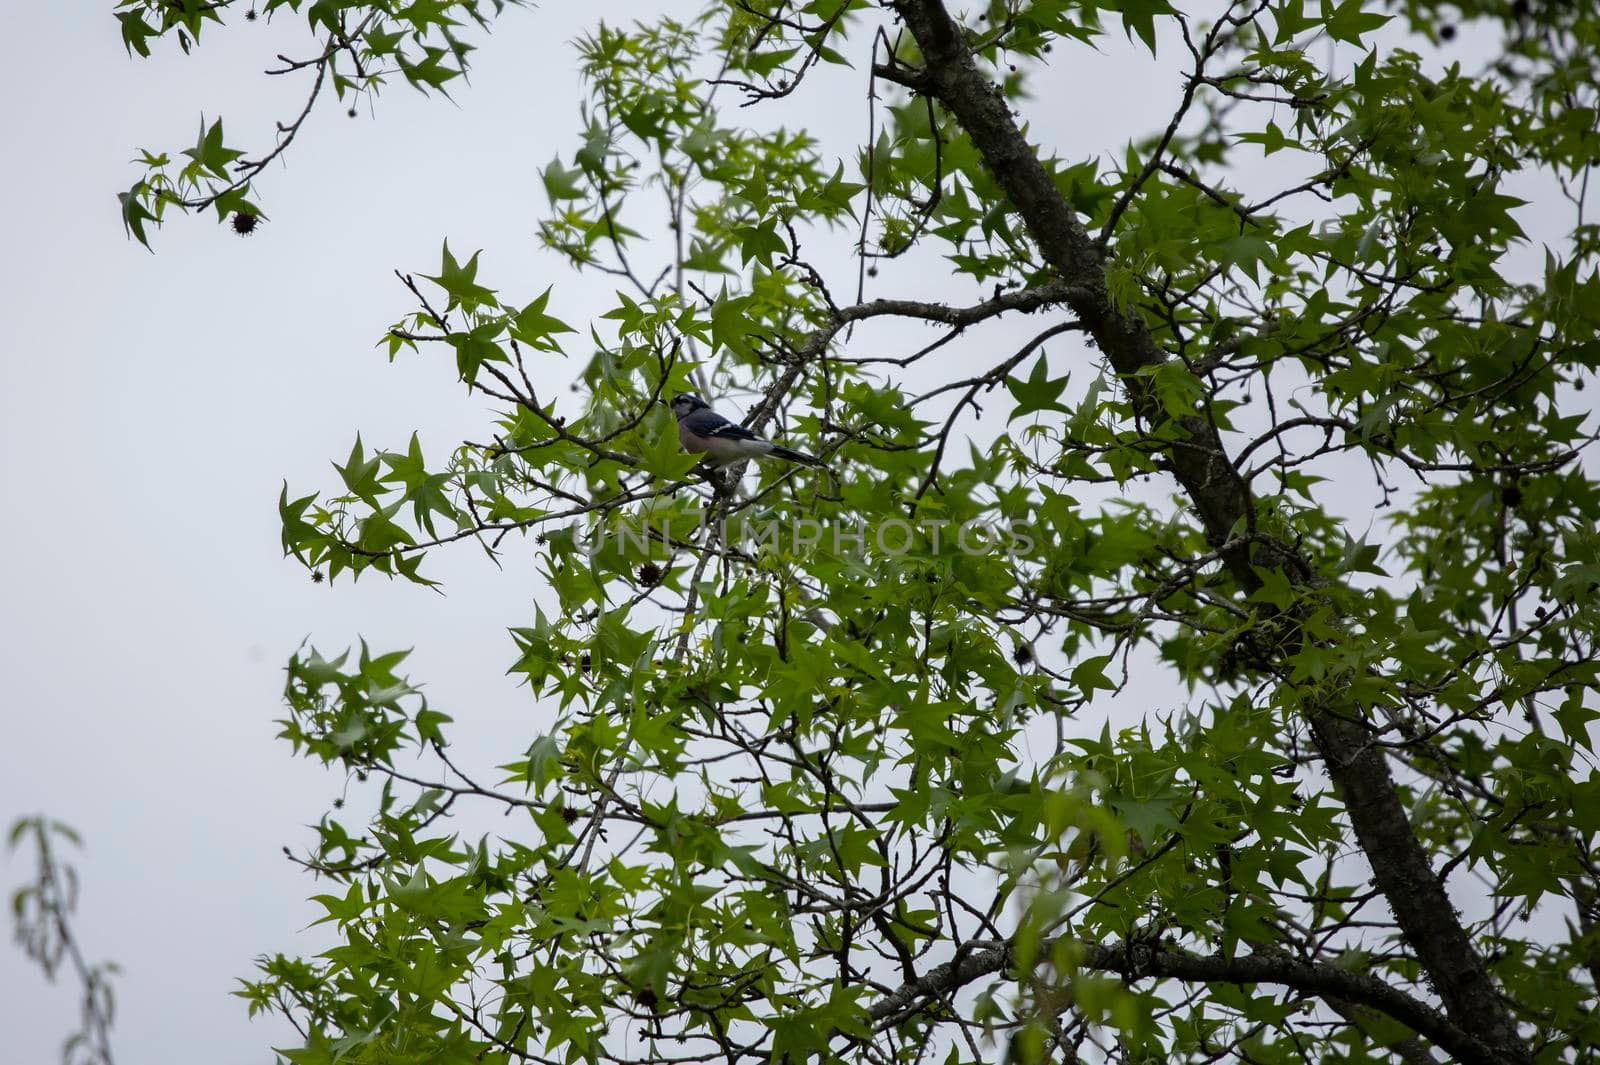 Blue jay (Cyanocitta cristata) hidden behind leaves in a tree